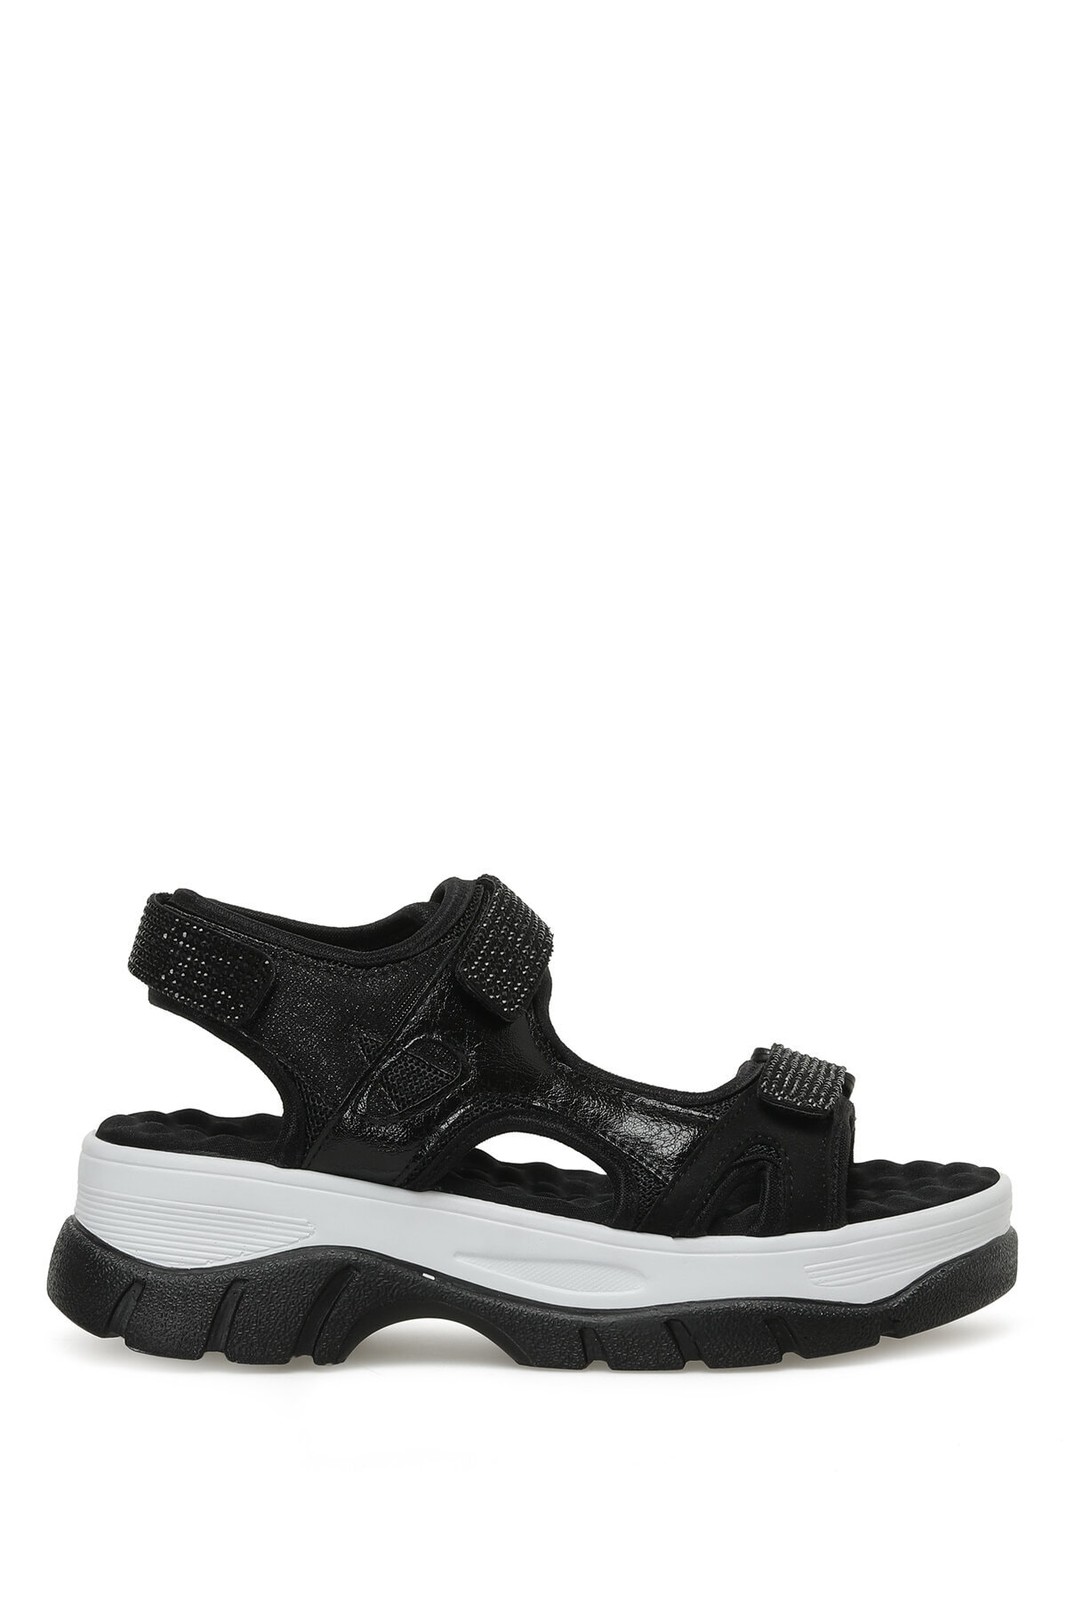 İnci Loren 3fx Women's Black Sport Sandal